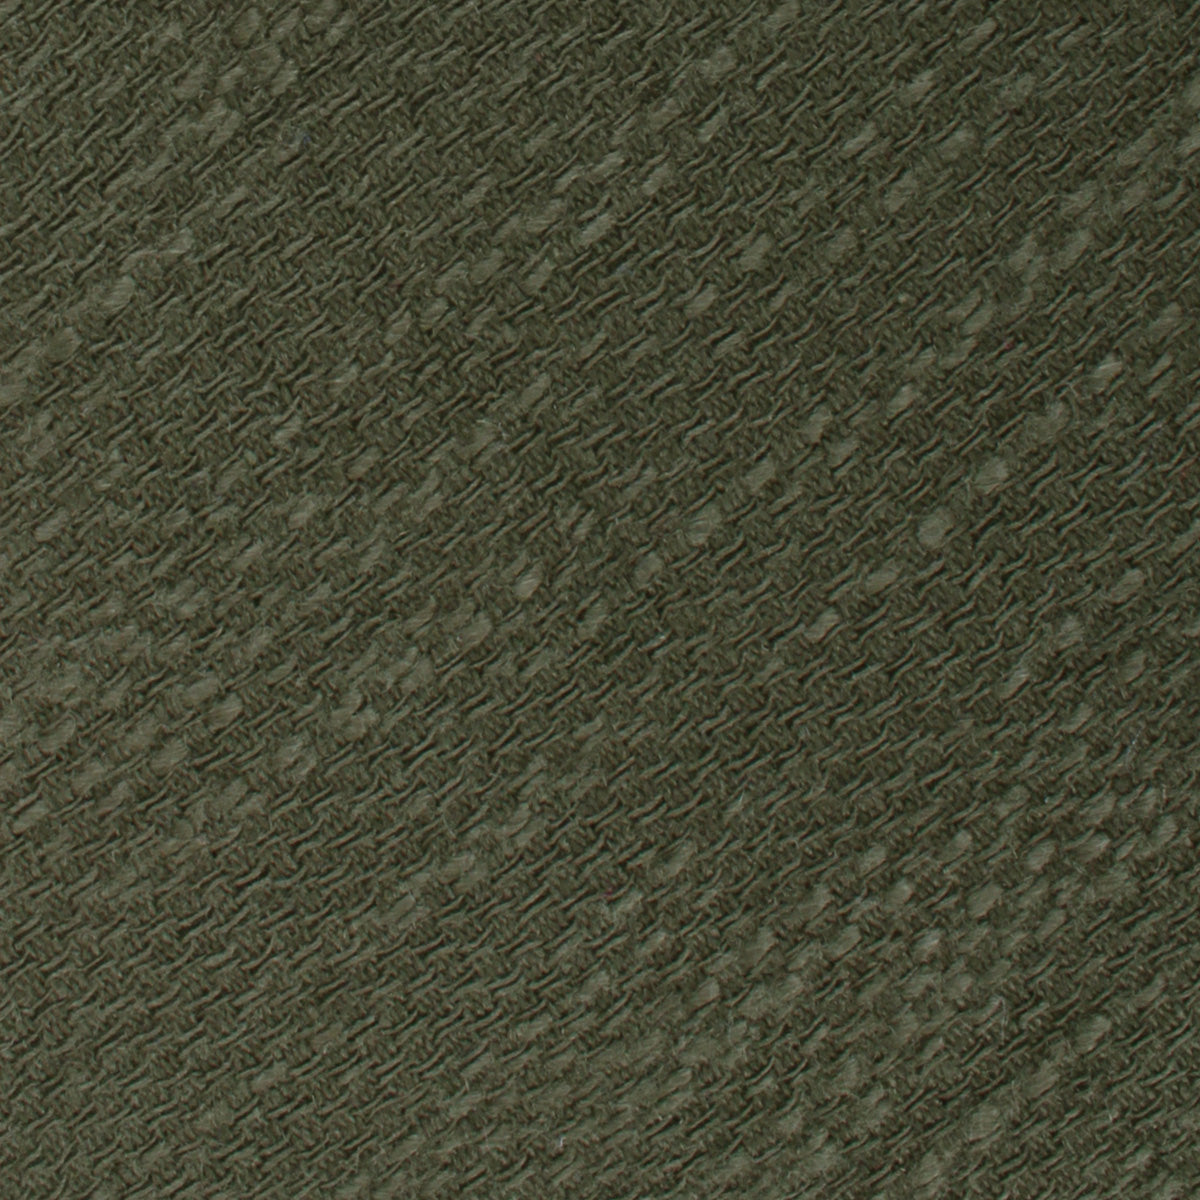 Olive Green Coarse Linen Pocket Square Fabric